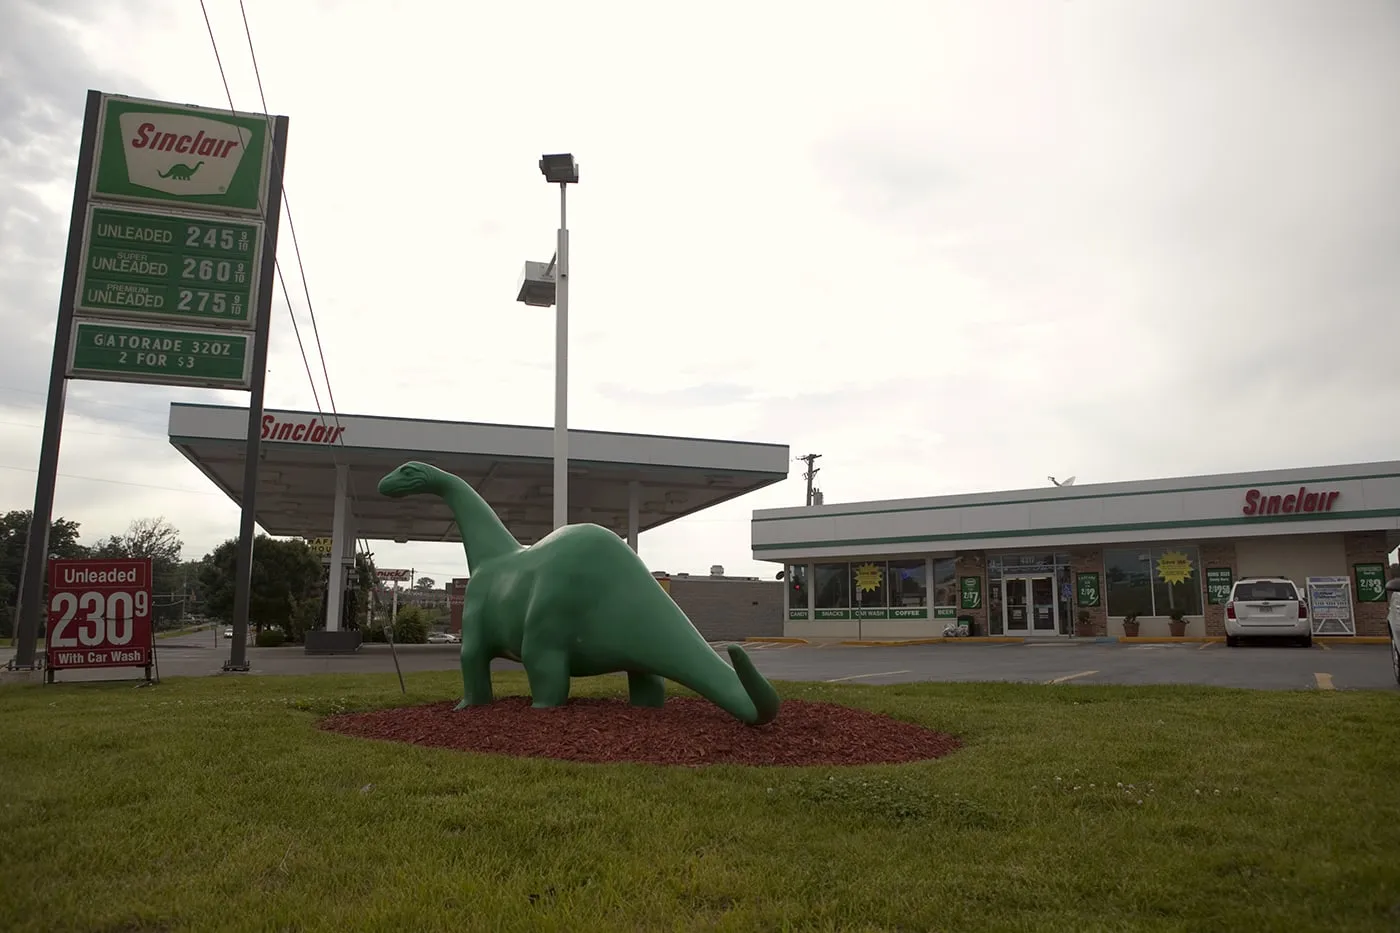 Dinosaur Roadside Attractions - Sinclair Oil Dinosaur at a Sinclair gas station in St. Louis, Missouri